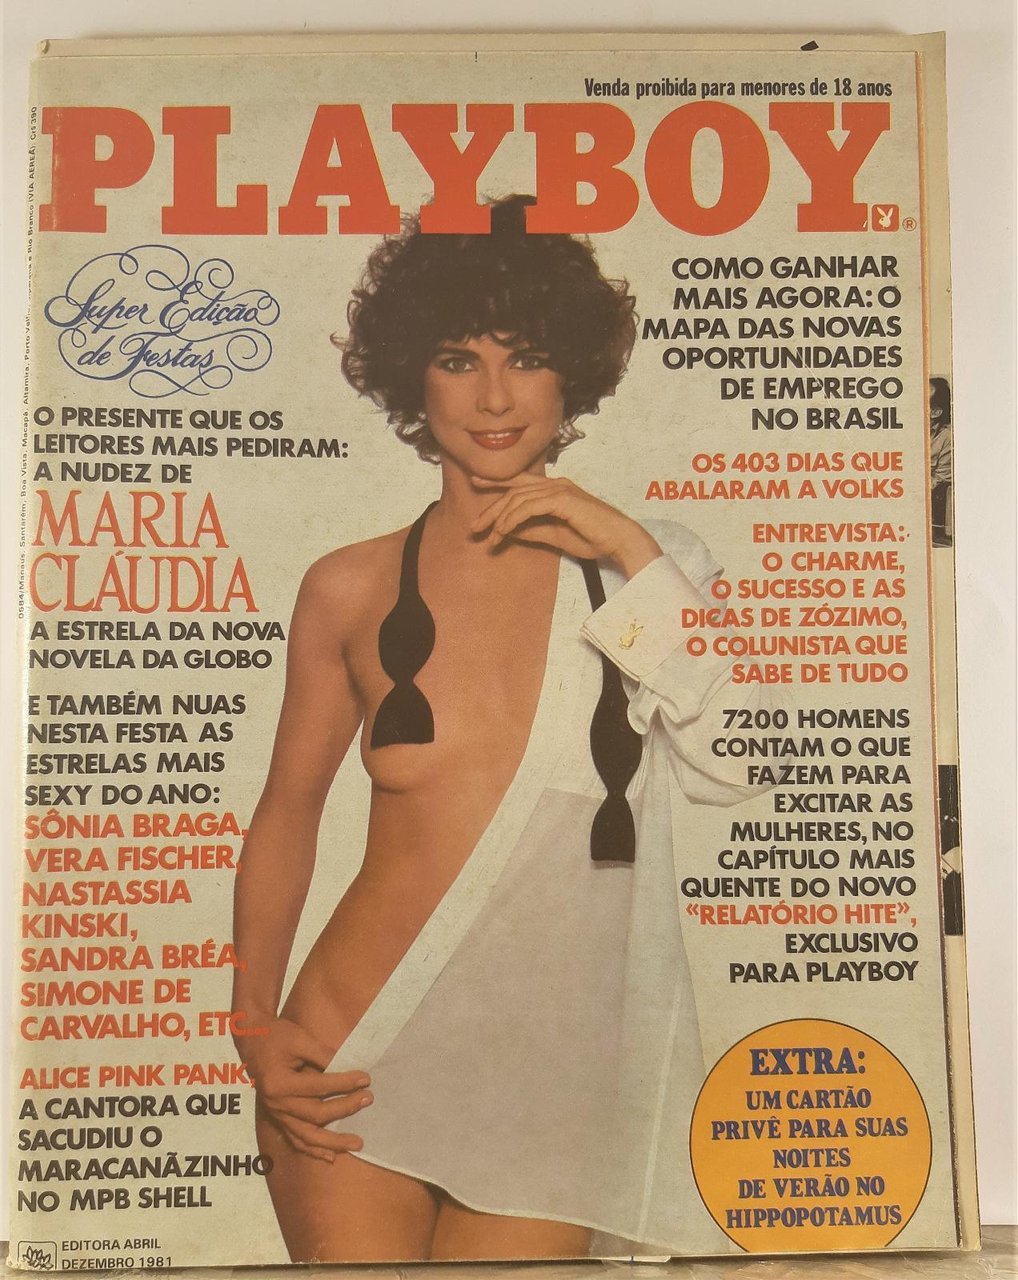 Playboy dicembre 1981 edizione Brasile